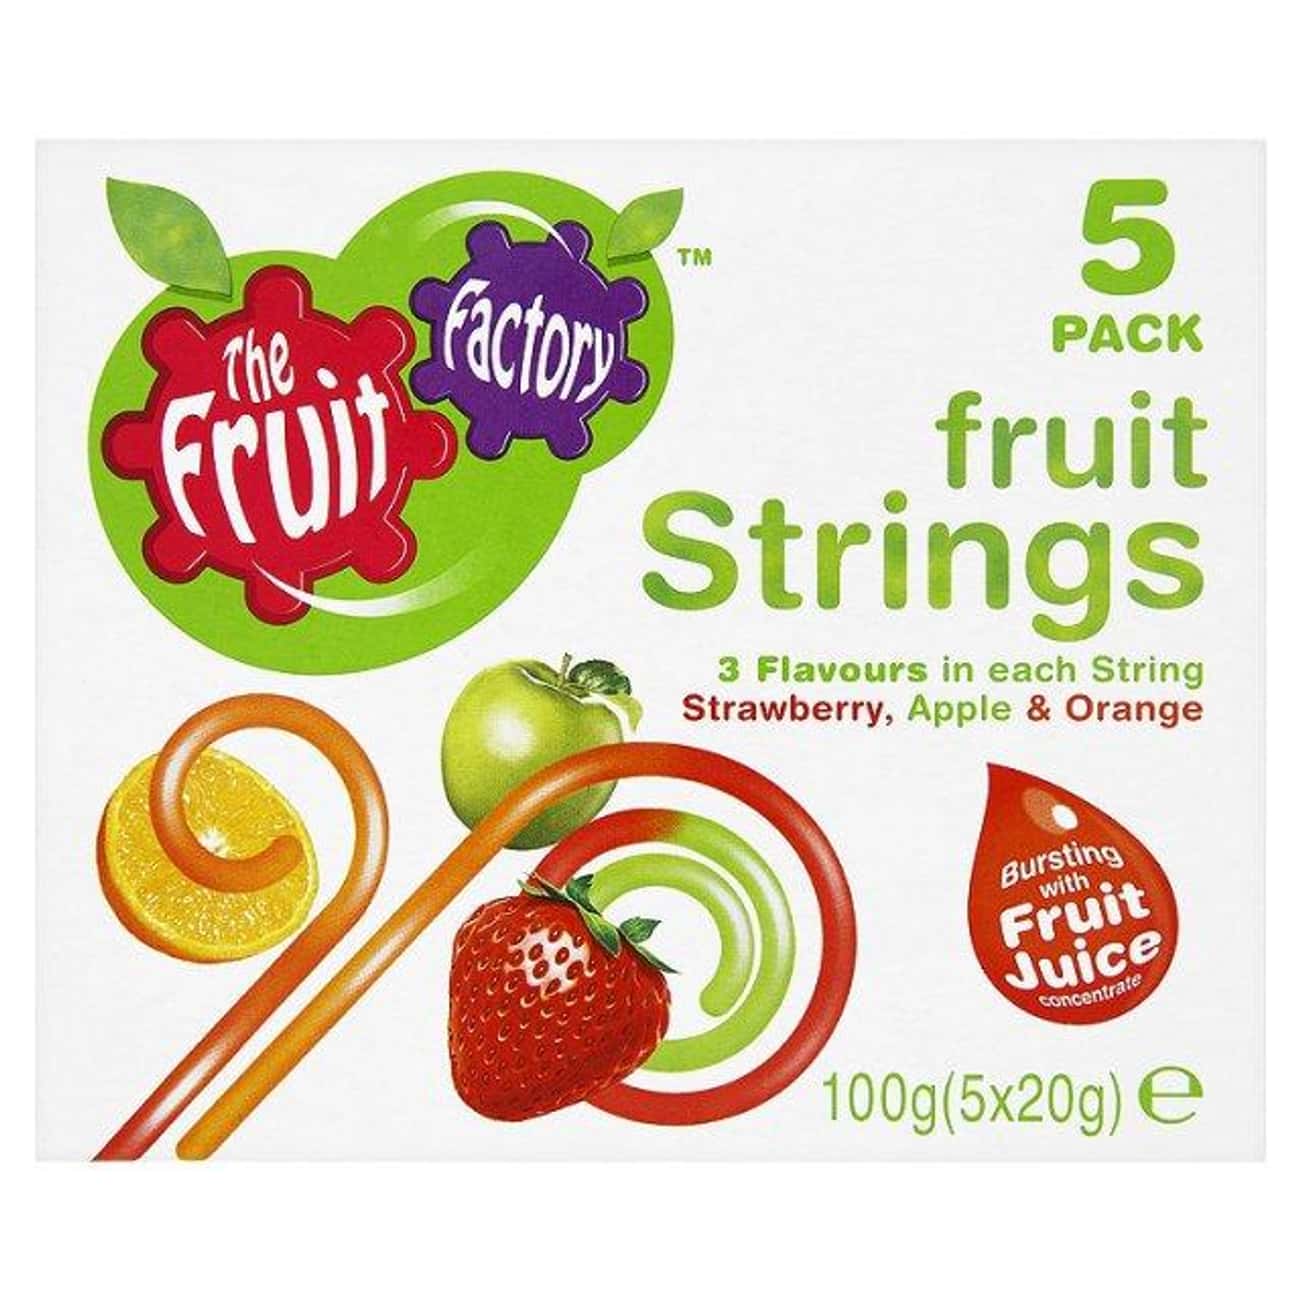 The Fruit Factory's Fruit Strings